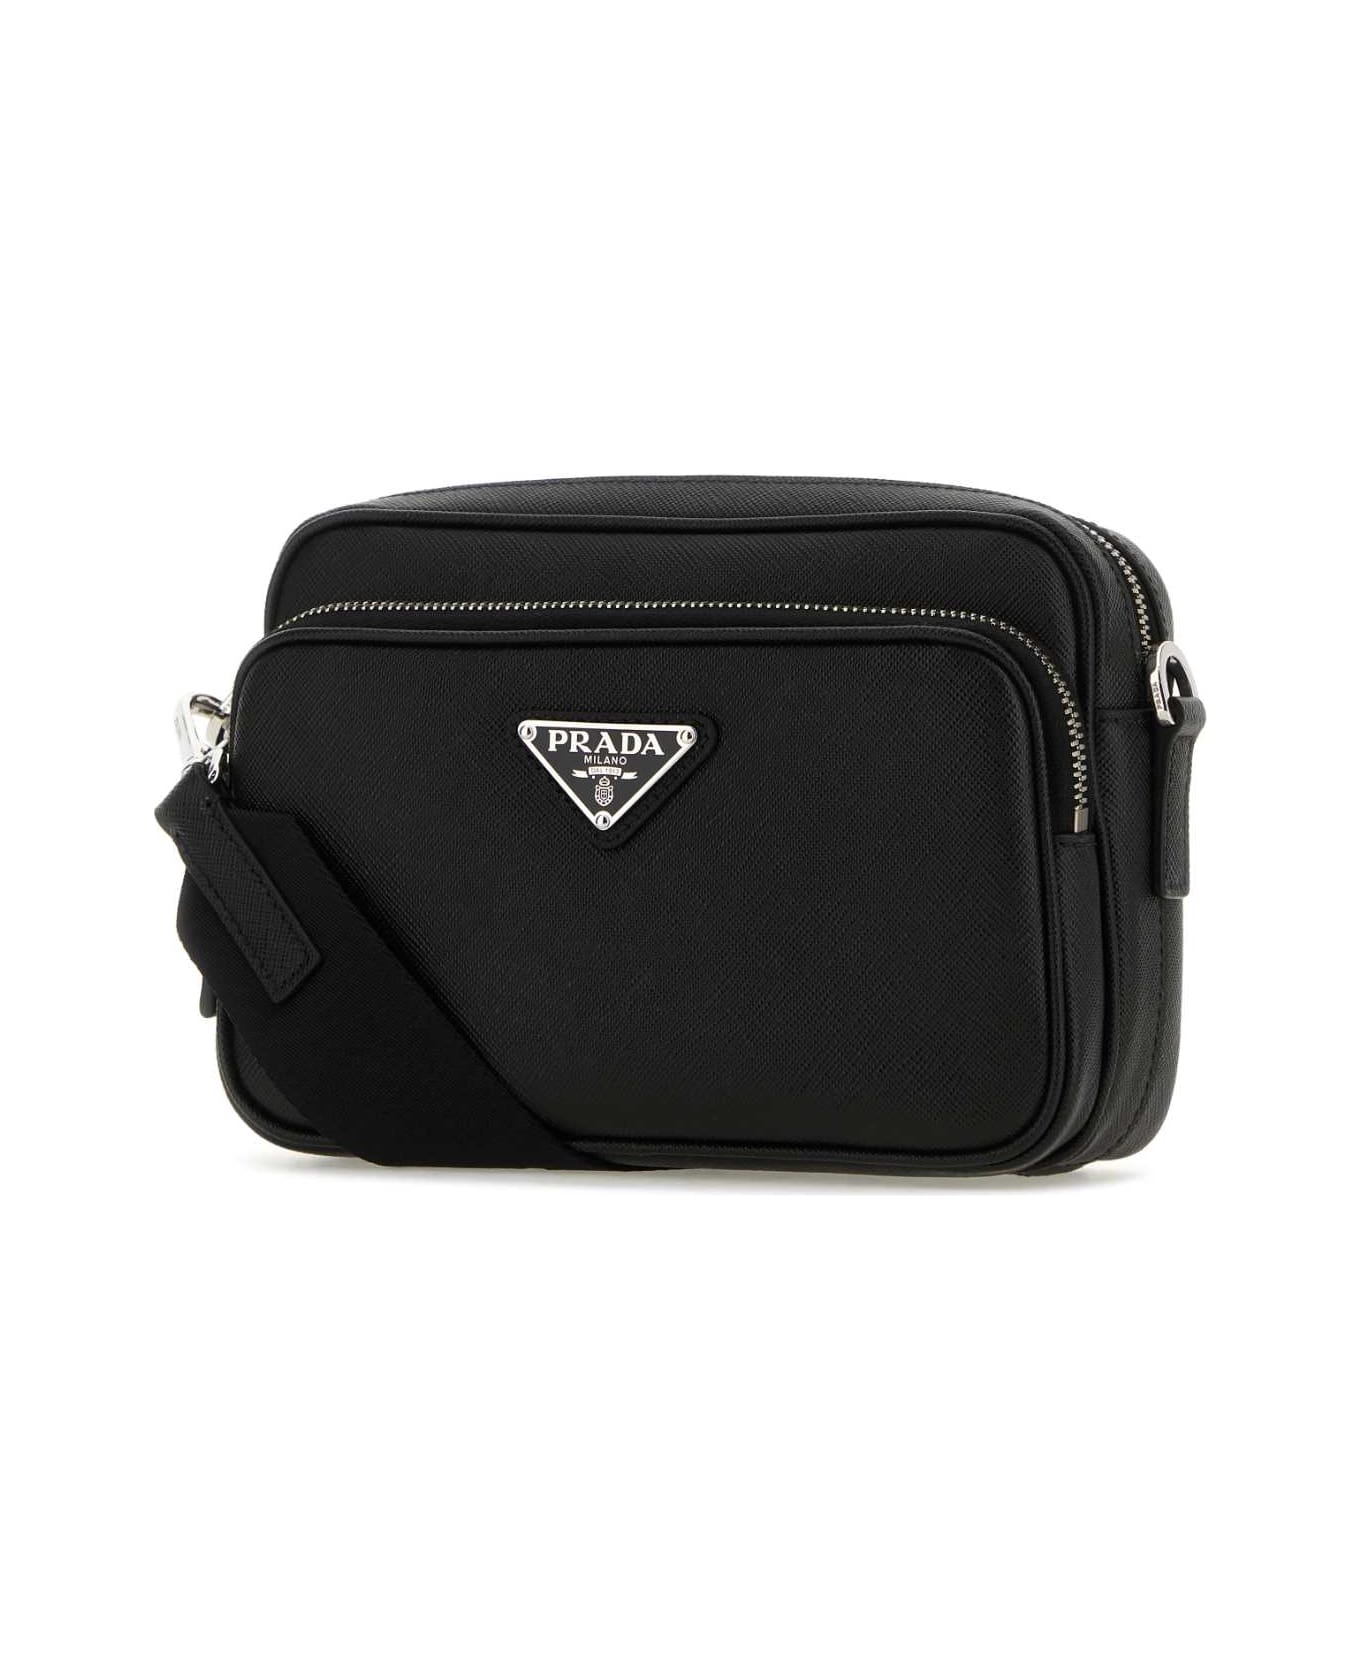 Prada Black Leather Crossbody Bag - NERO